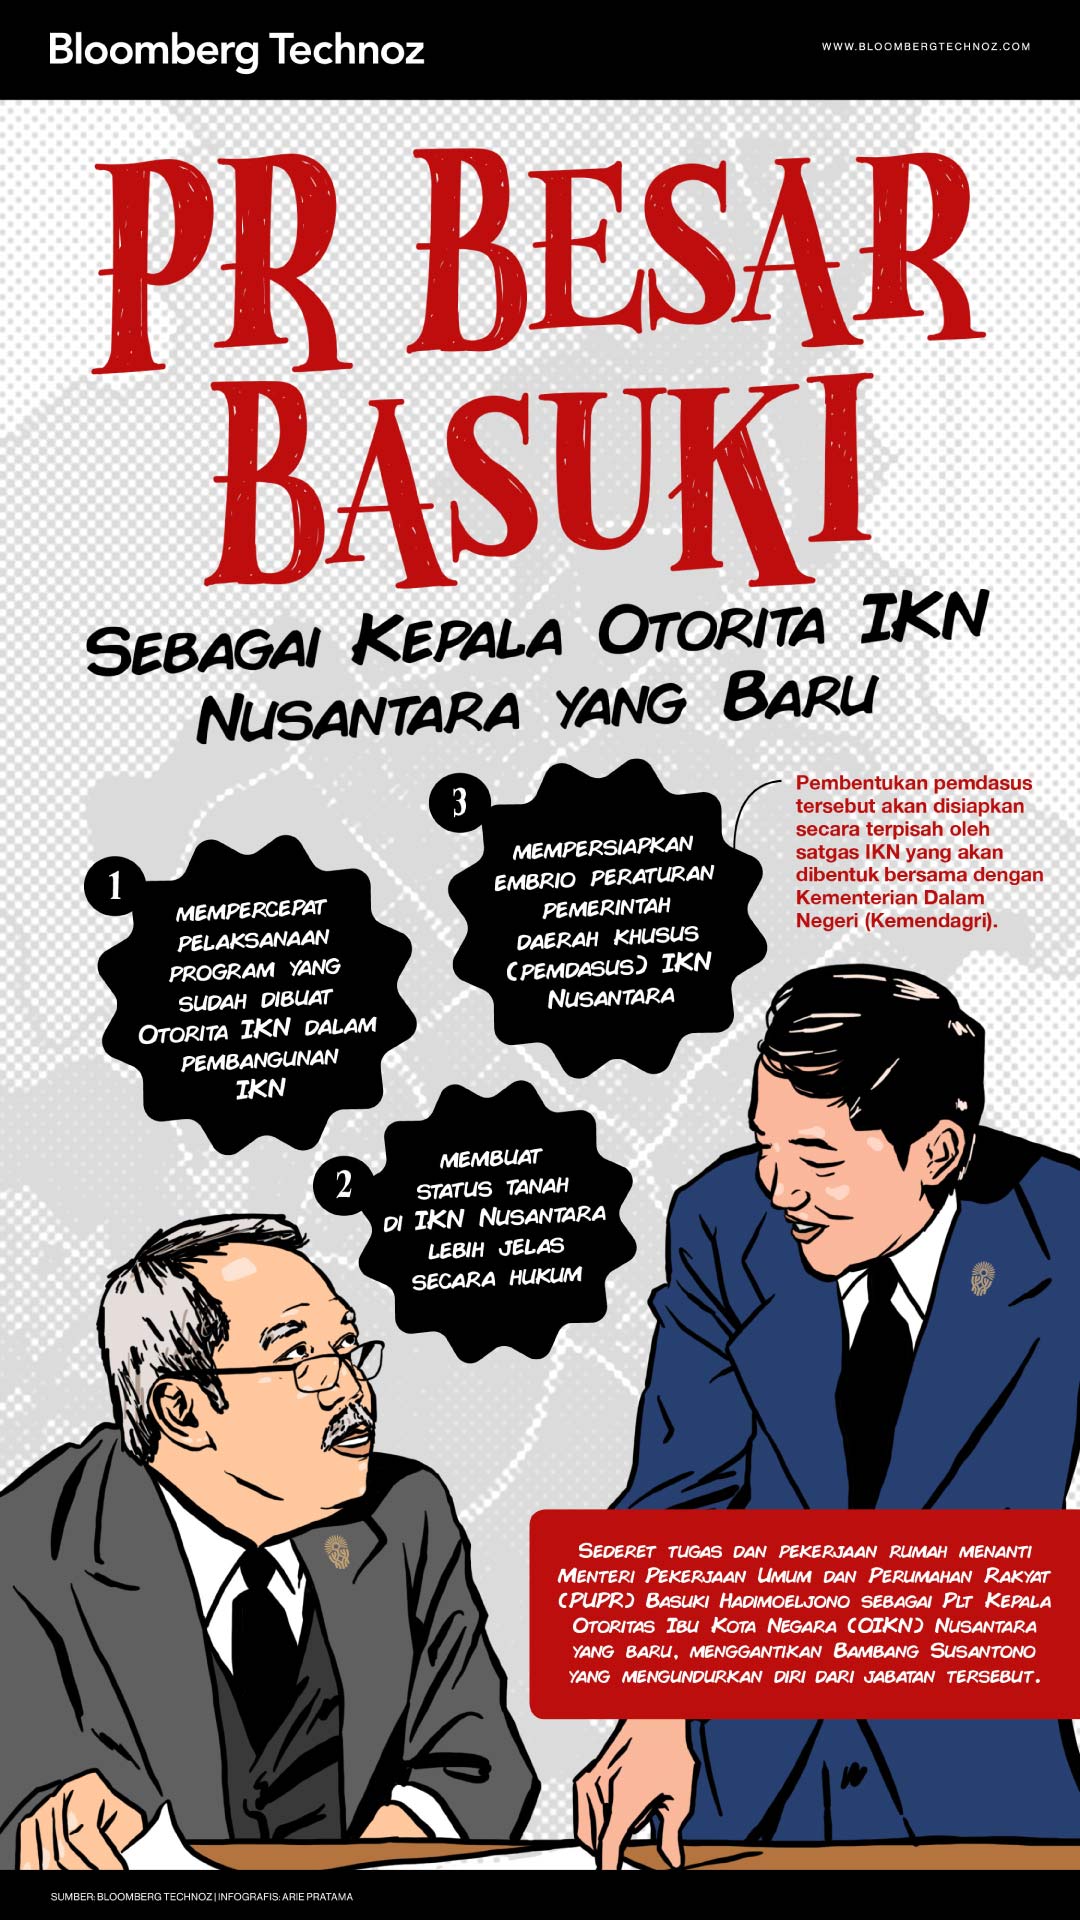 PR Besar Basuki Sebagai Kepala Otorita IKN Nusantara yang Baru (Bloomberg Technoz/Arie Pratama)